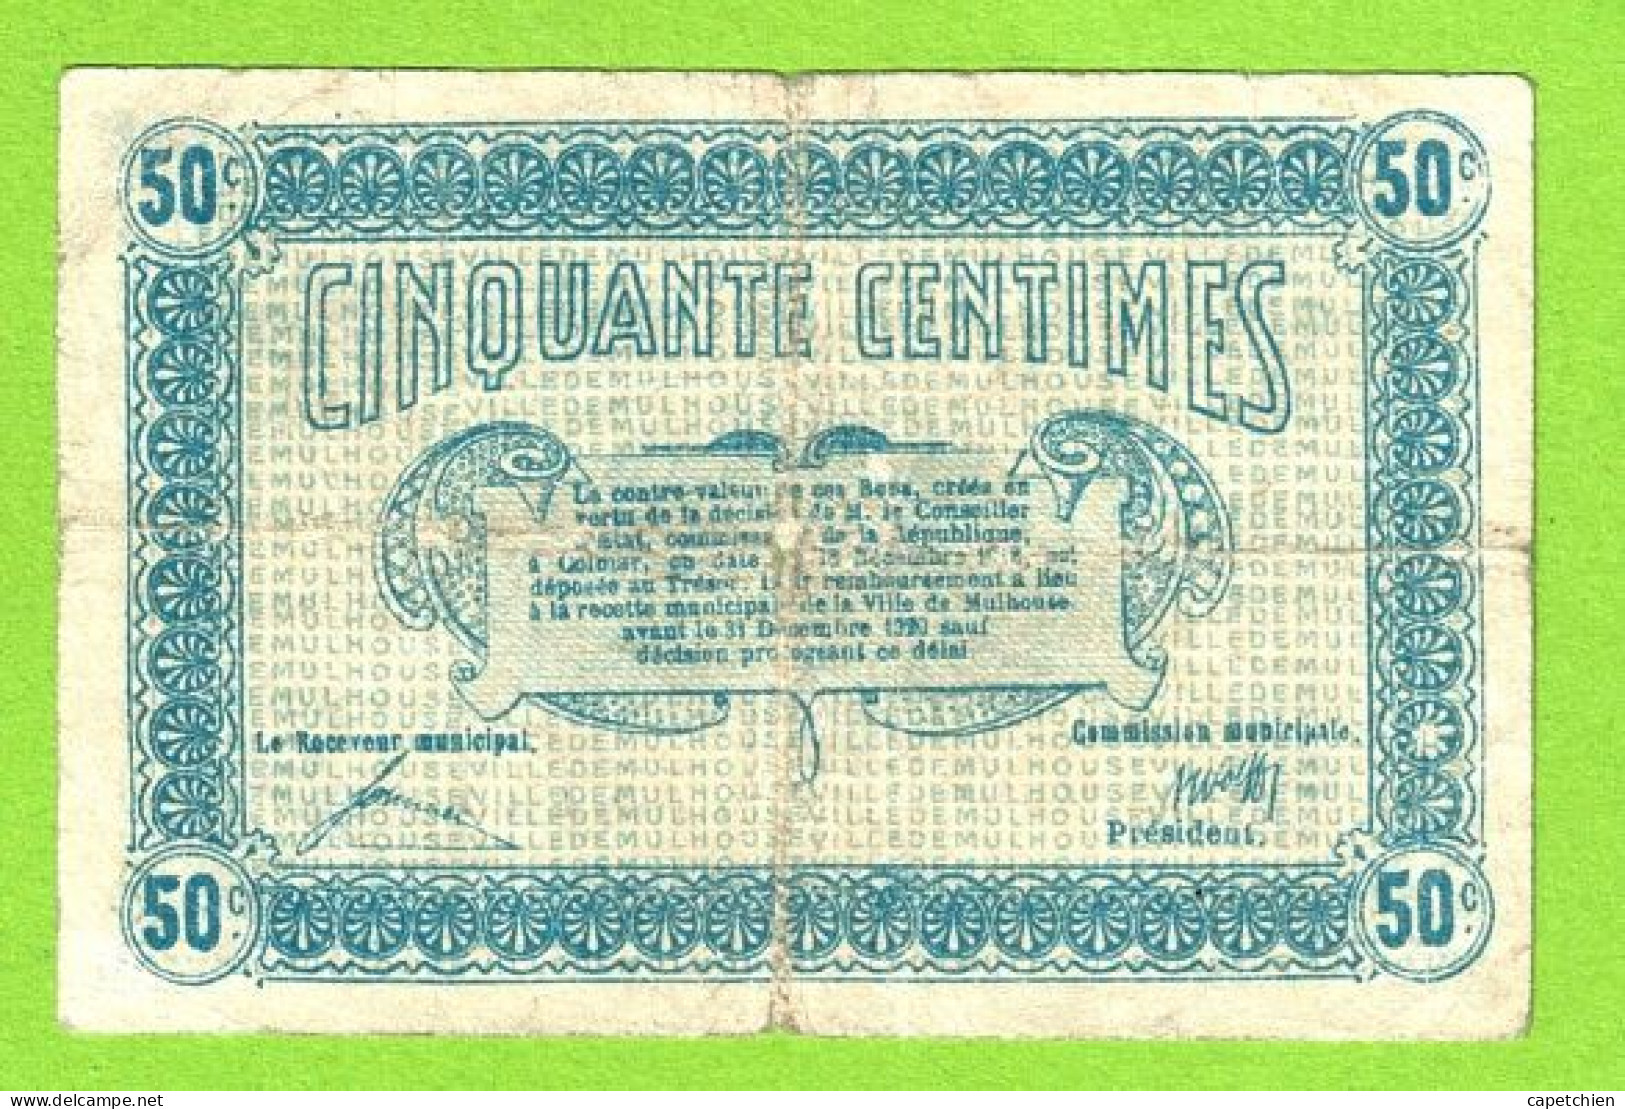 FRANCE / MULHOUSE / 50 CENTIMES / 28 DECEMBRE 1918 / N° 75143 - SERIE B - Cámara De Comercio